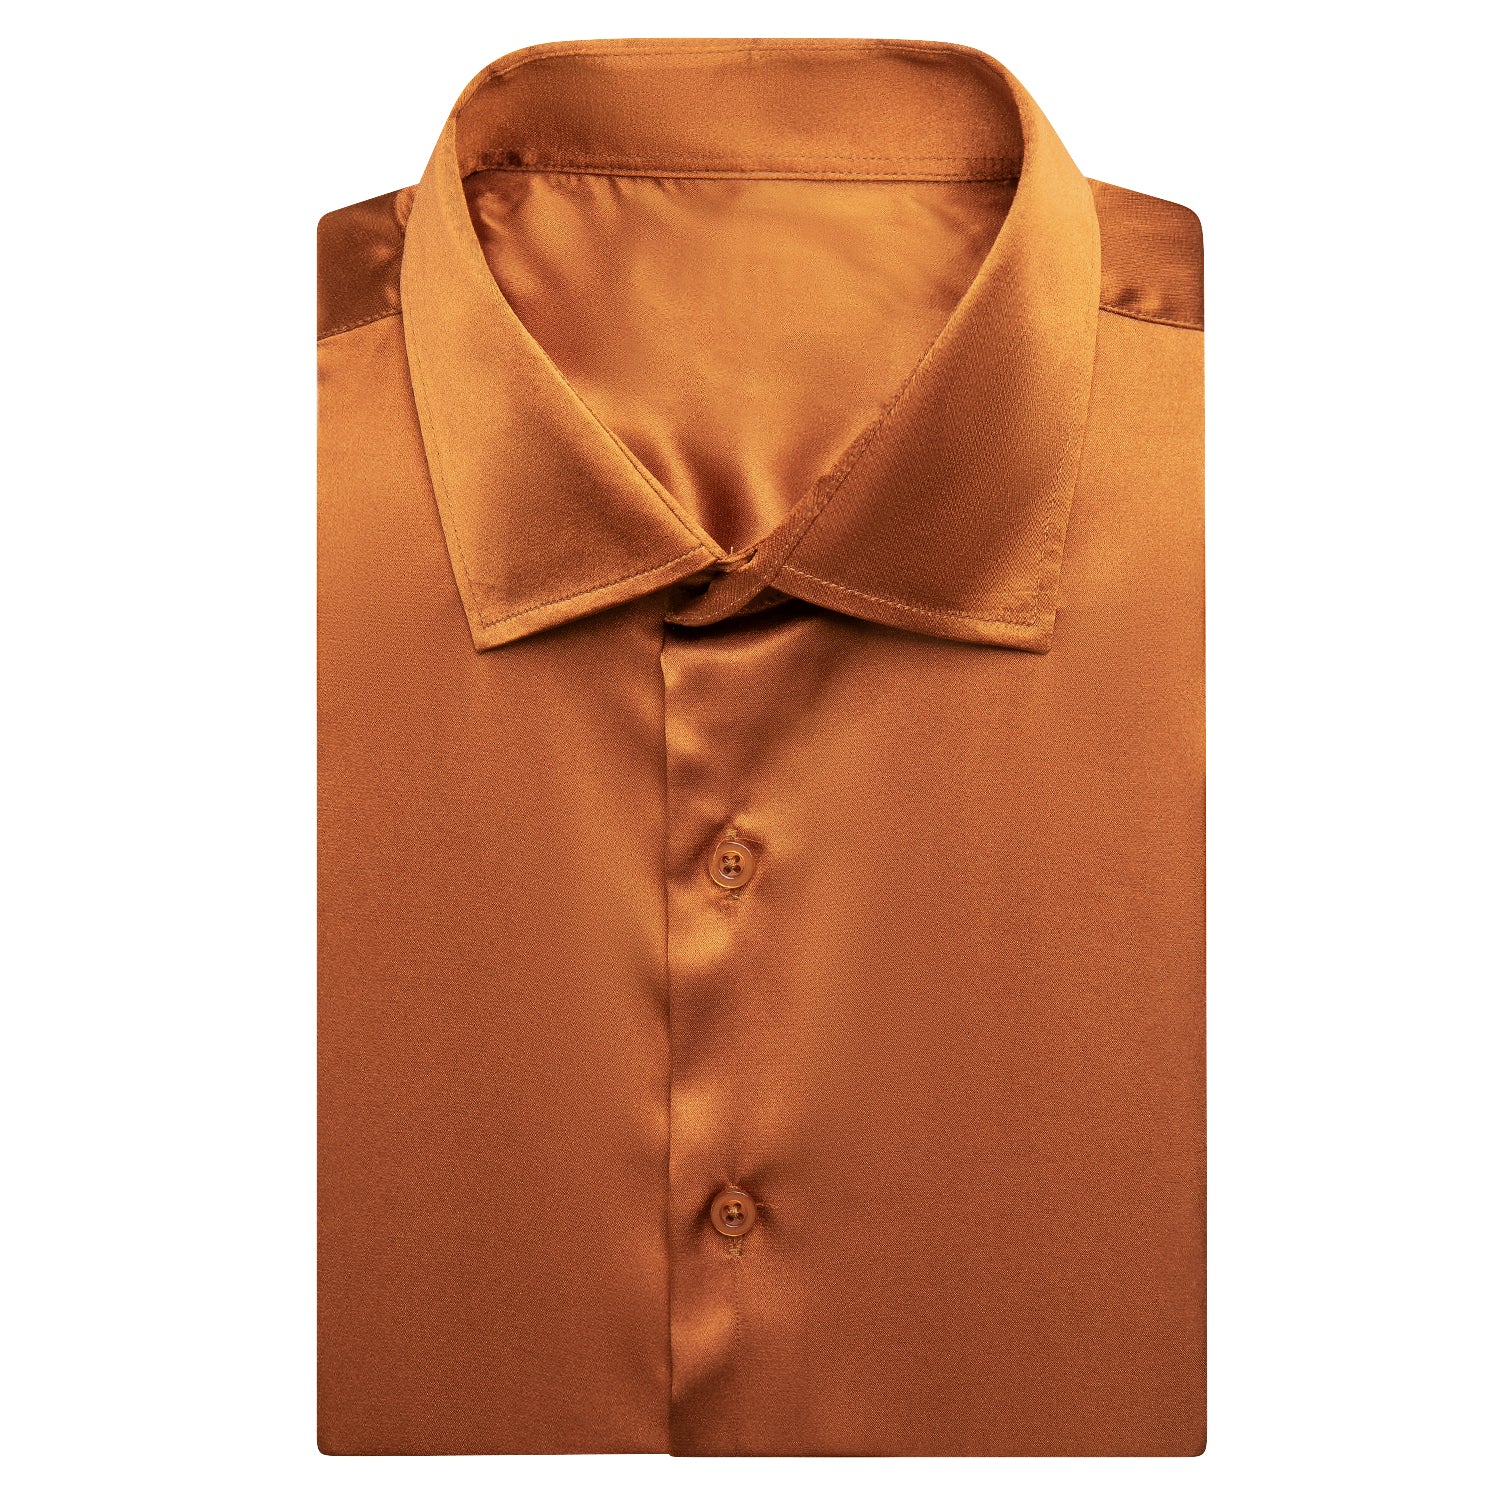 New Orange Solid Satin Men's Short Sleeve Shirt